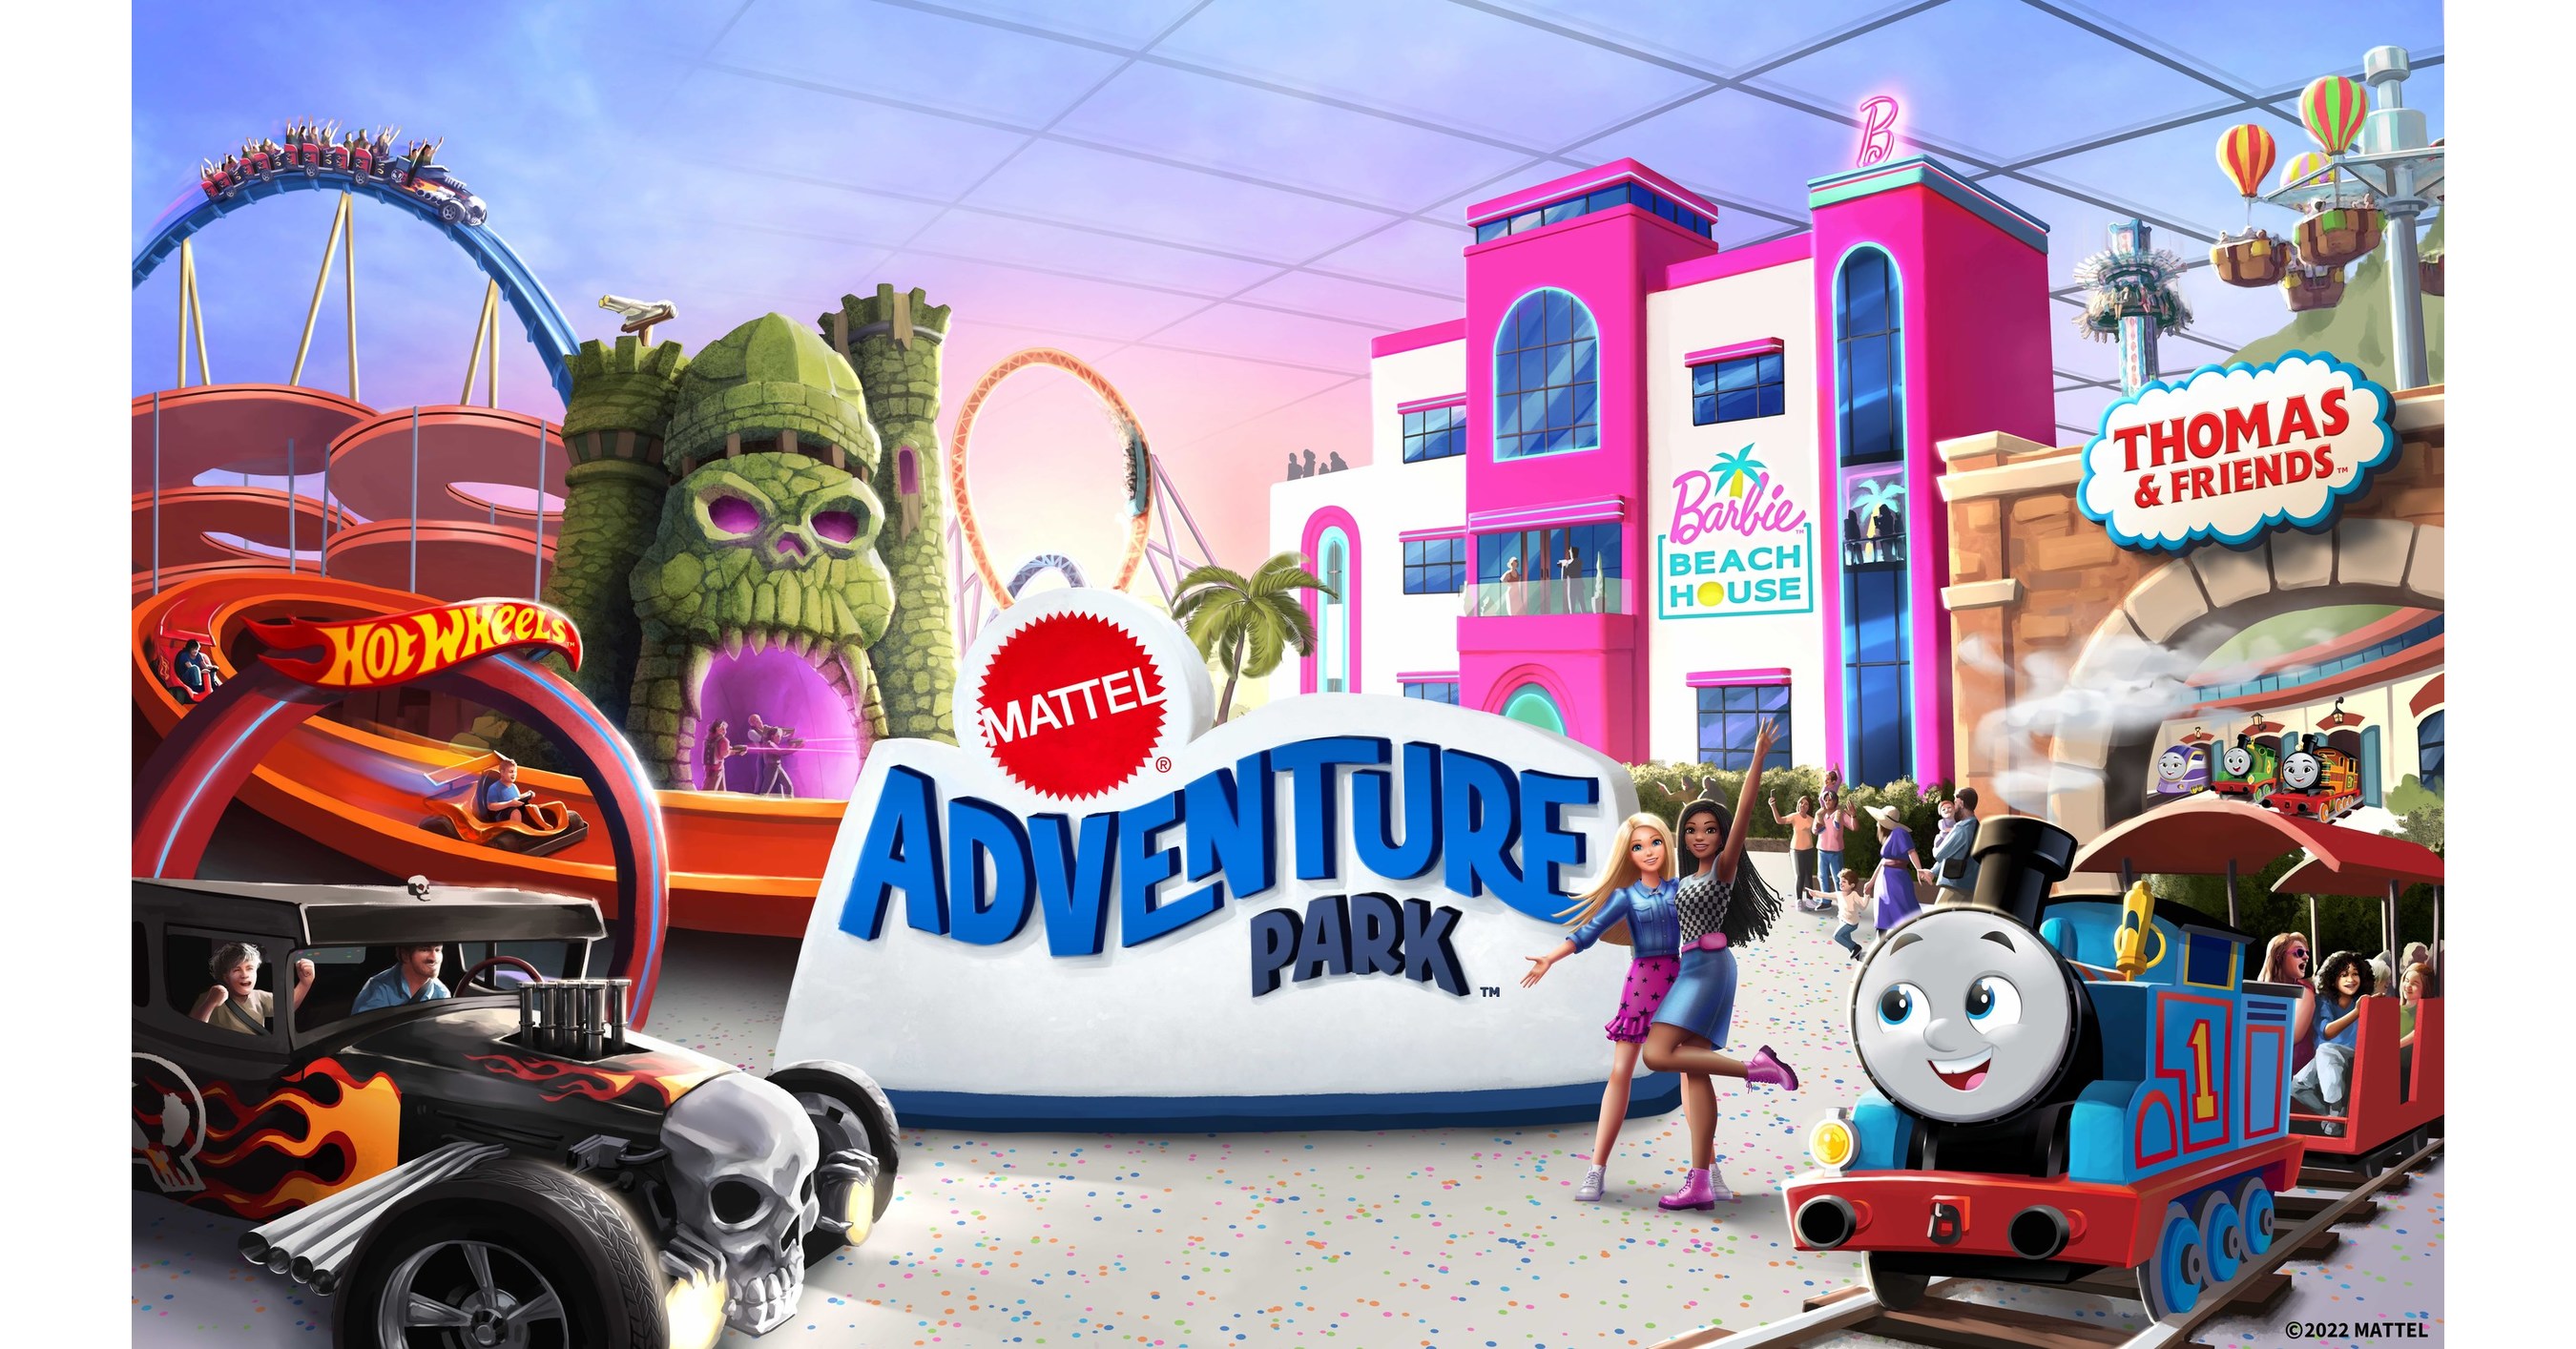 Strategic Amusement Industry Partnerships Pave the Way for Major Fun, Memory-Making at Mattel Adventure Park